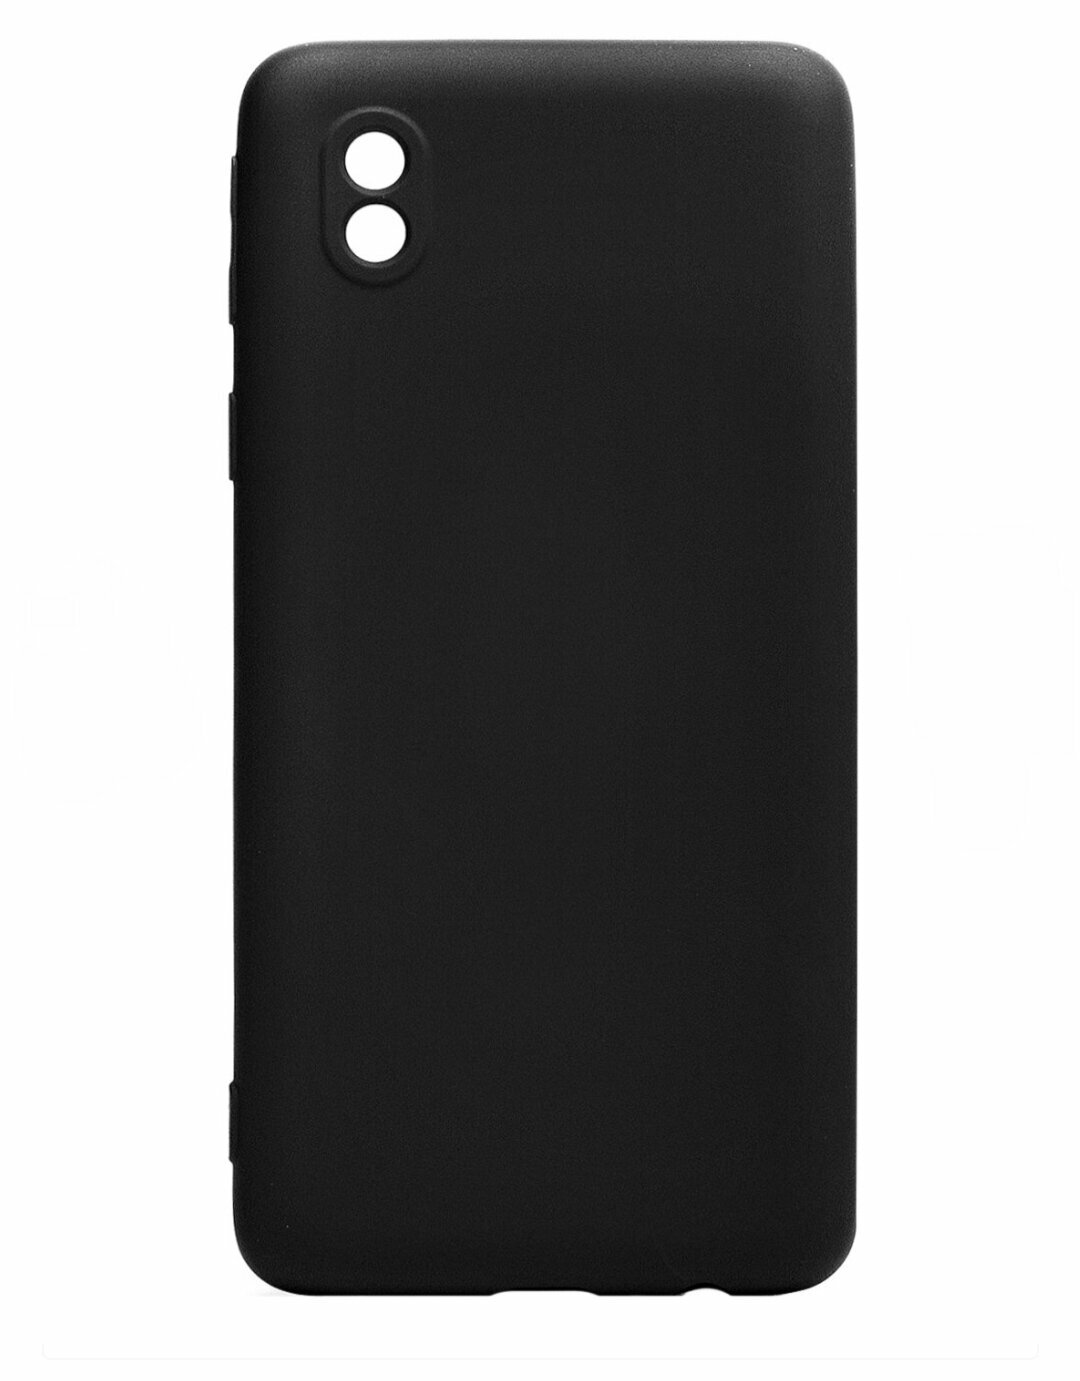 Samsung Galaxy A01 core, m1 core чёрный чехол бампер для самсунг галакси а01 кор м1 коре накладка